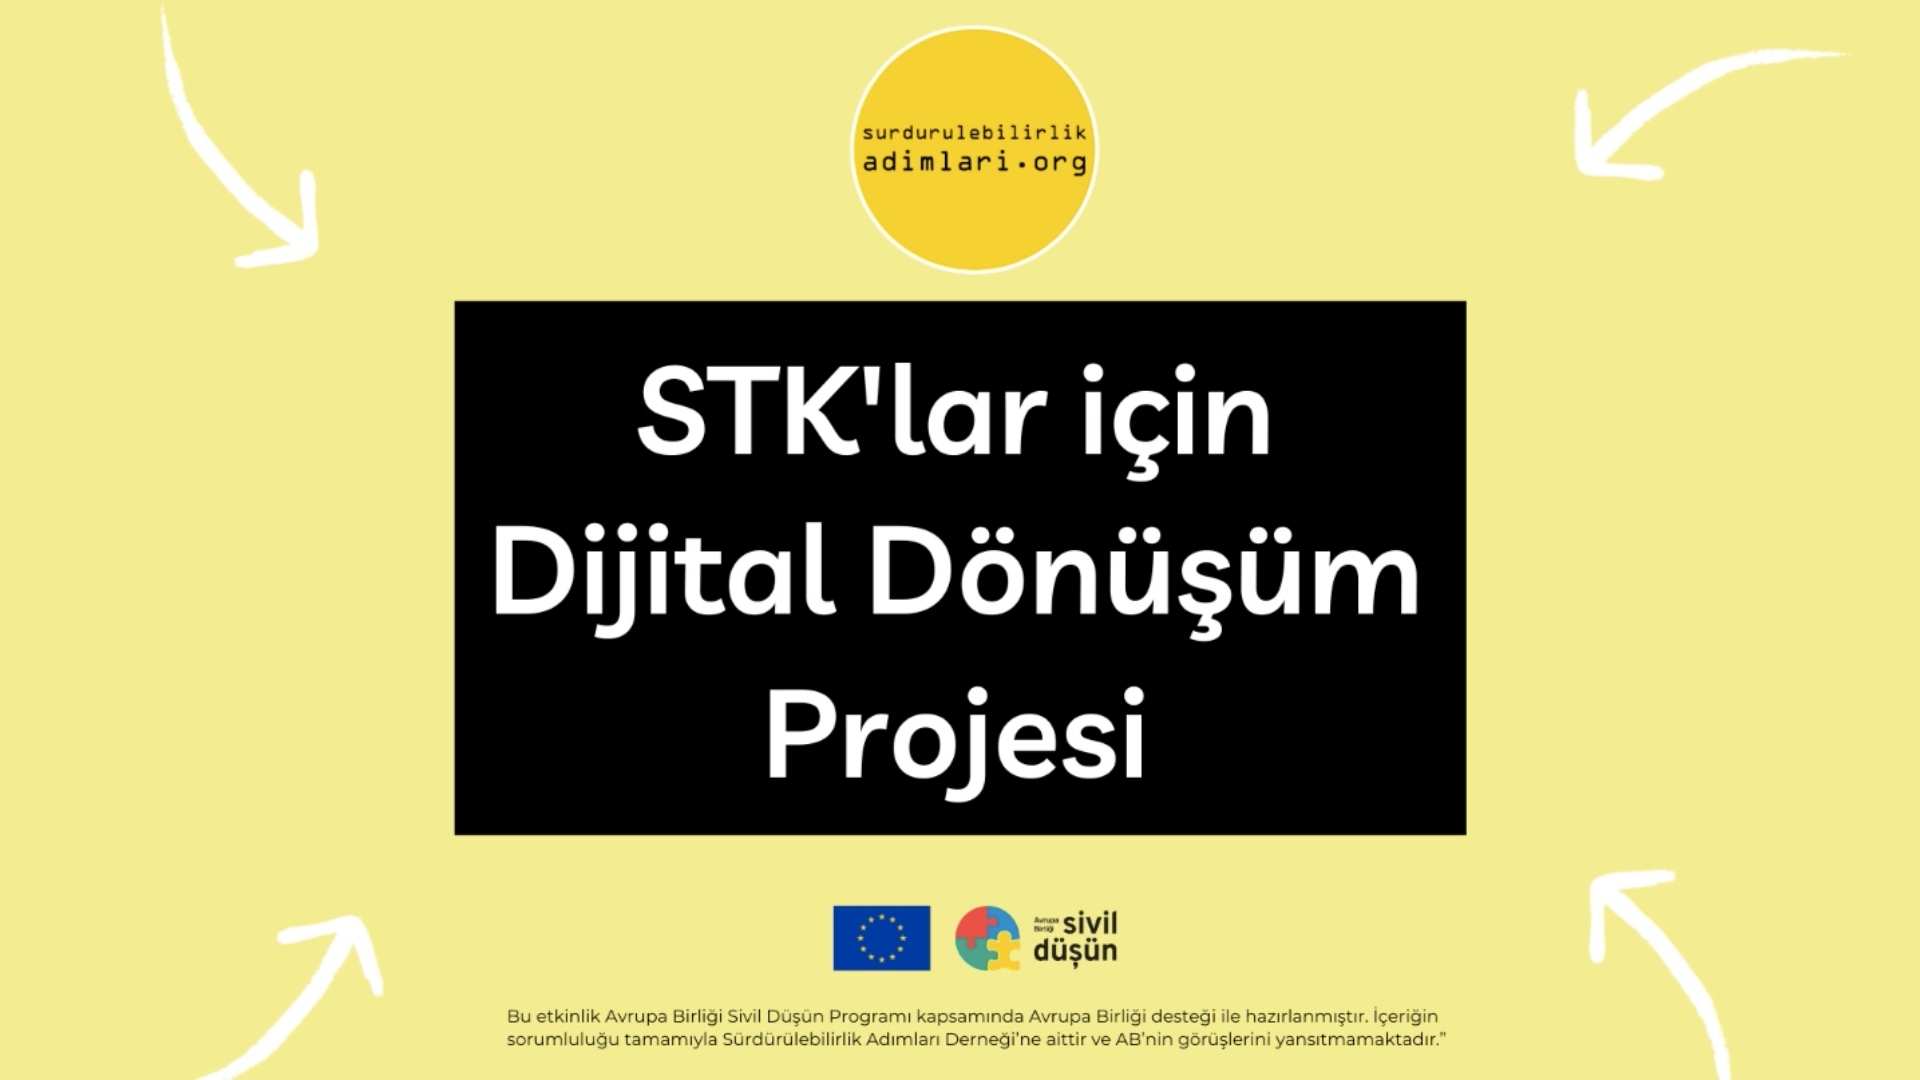 Digital Transformation for NGOs Sivil Dusun